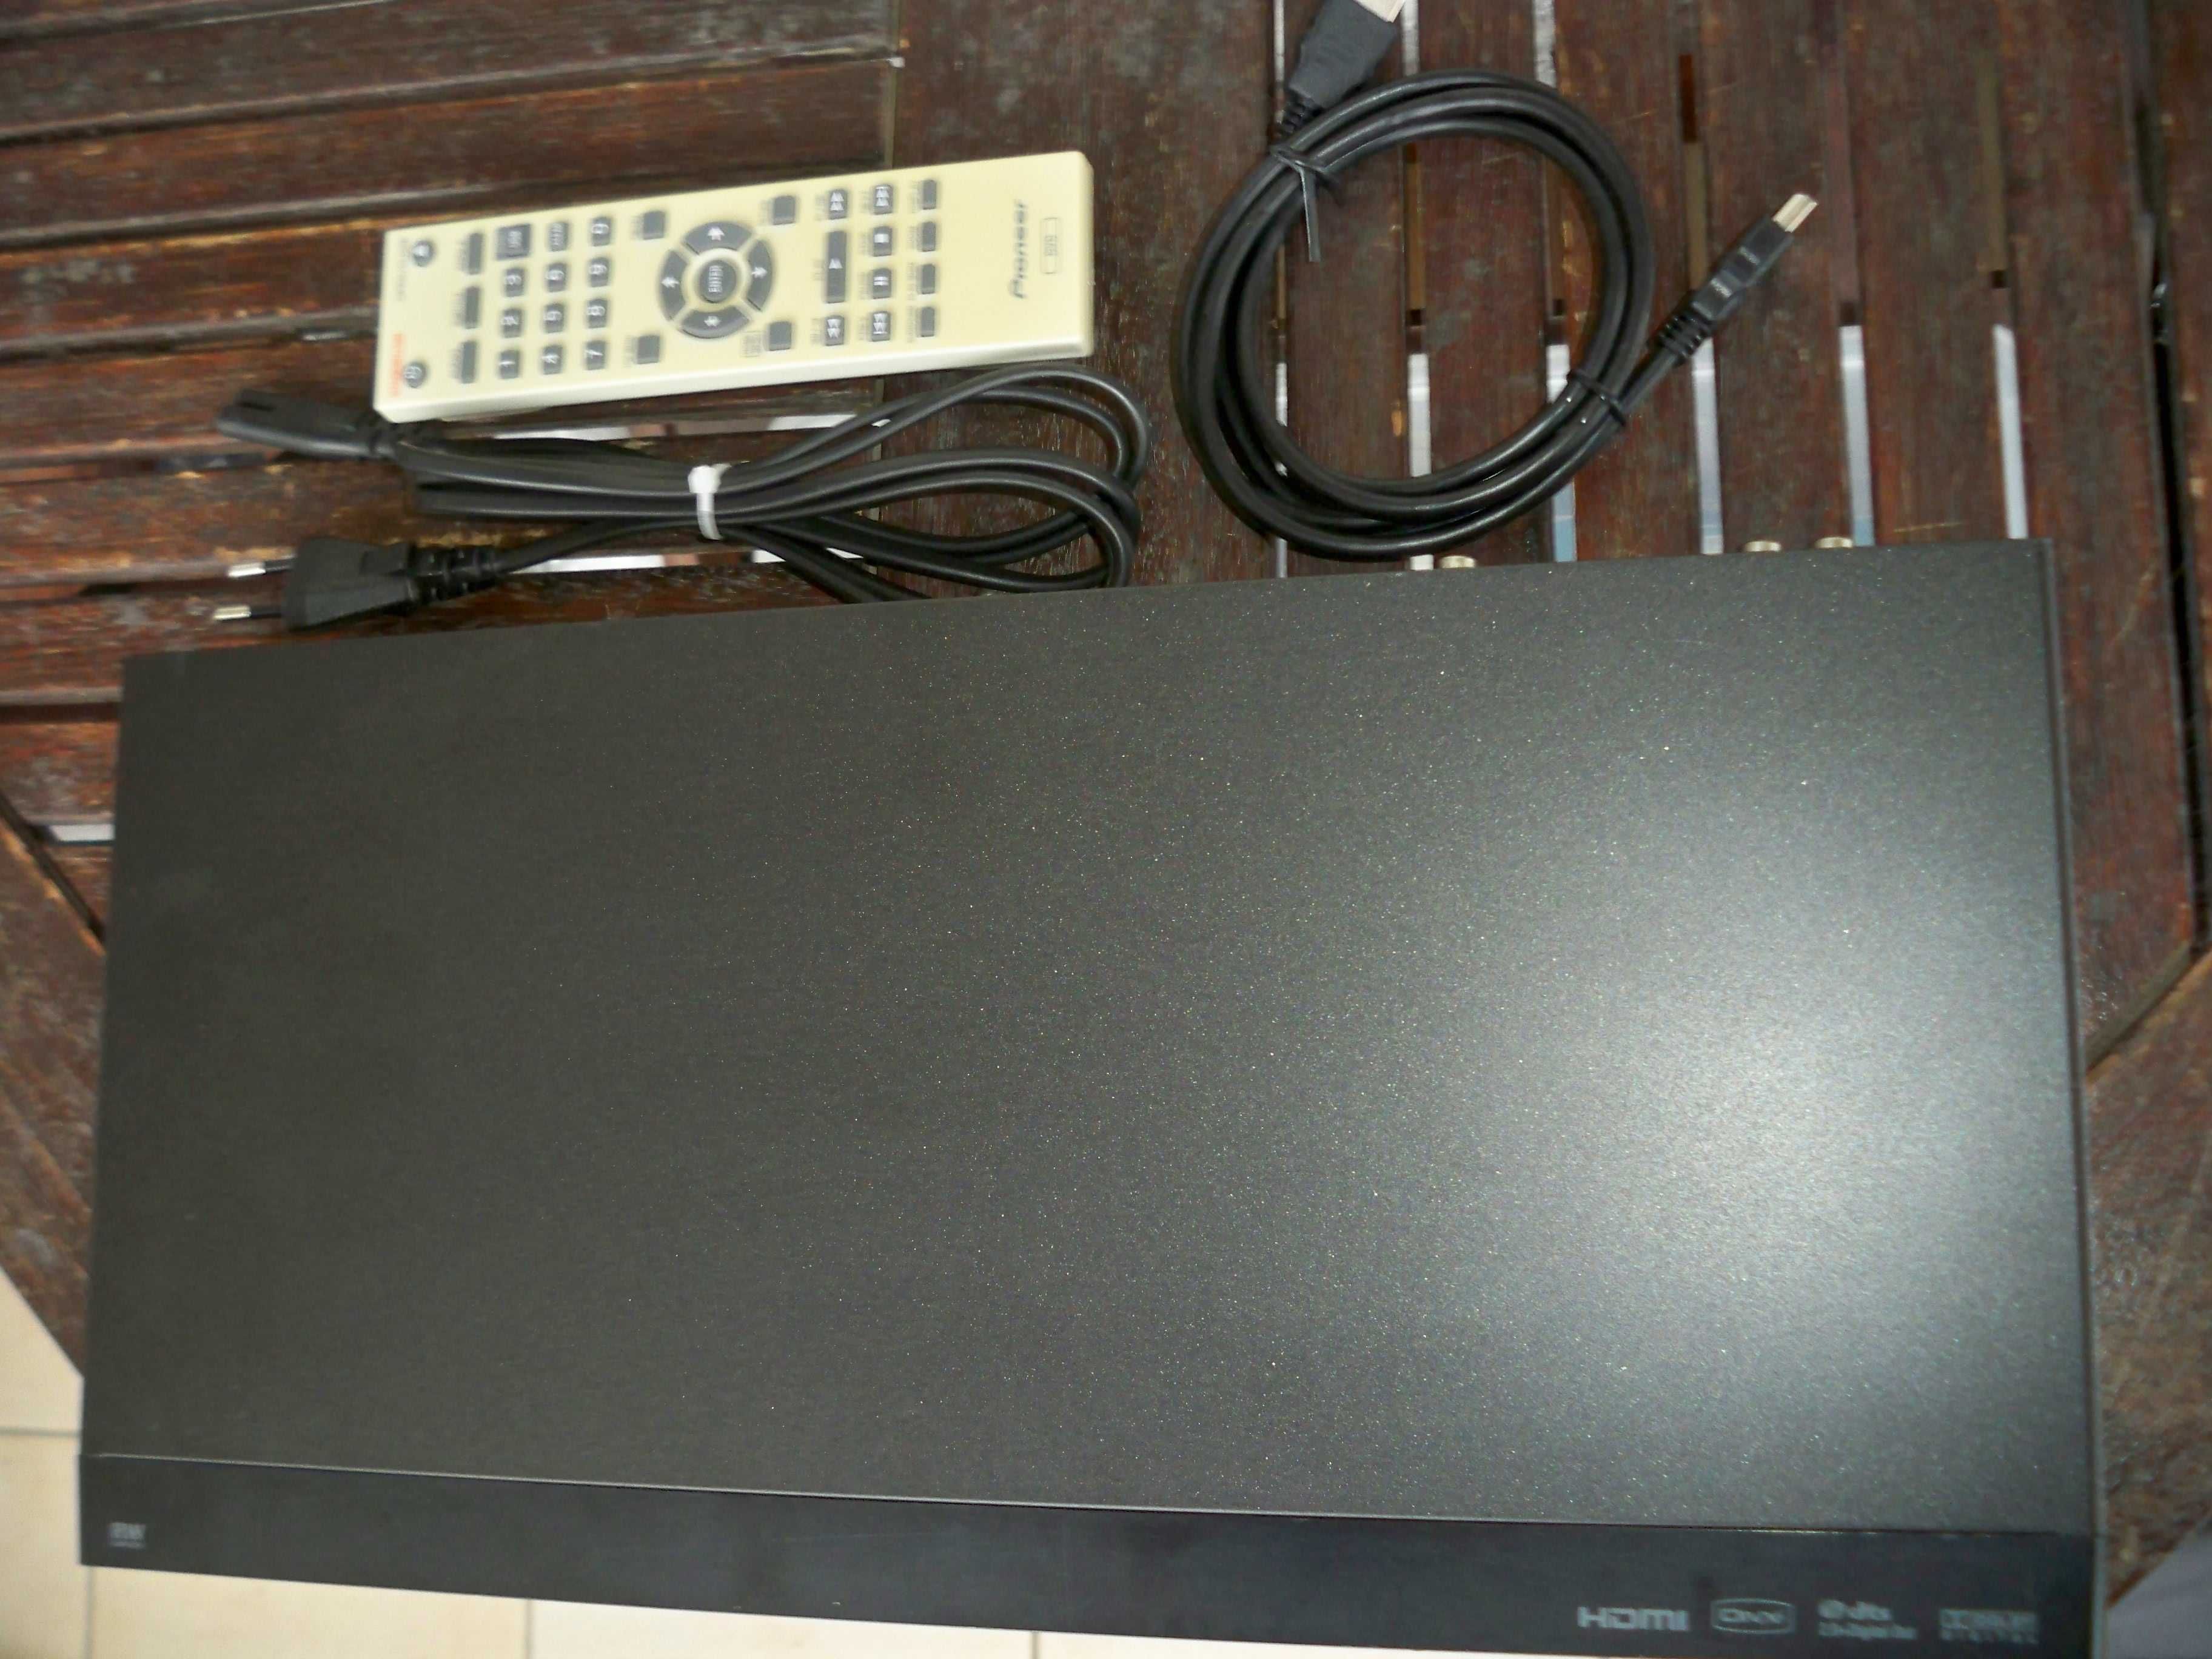 odtwarzacz DVD Pioneer DV-410 + pilot, USB, kabel hdmi gratis